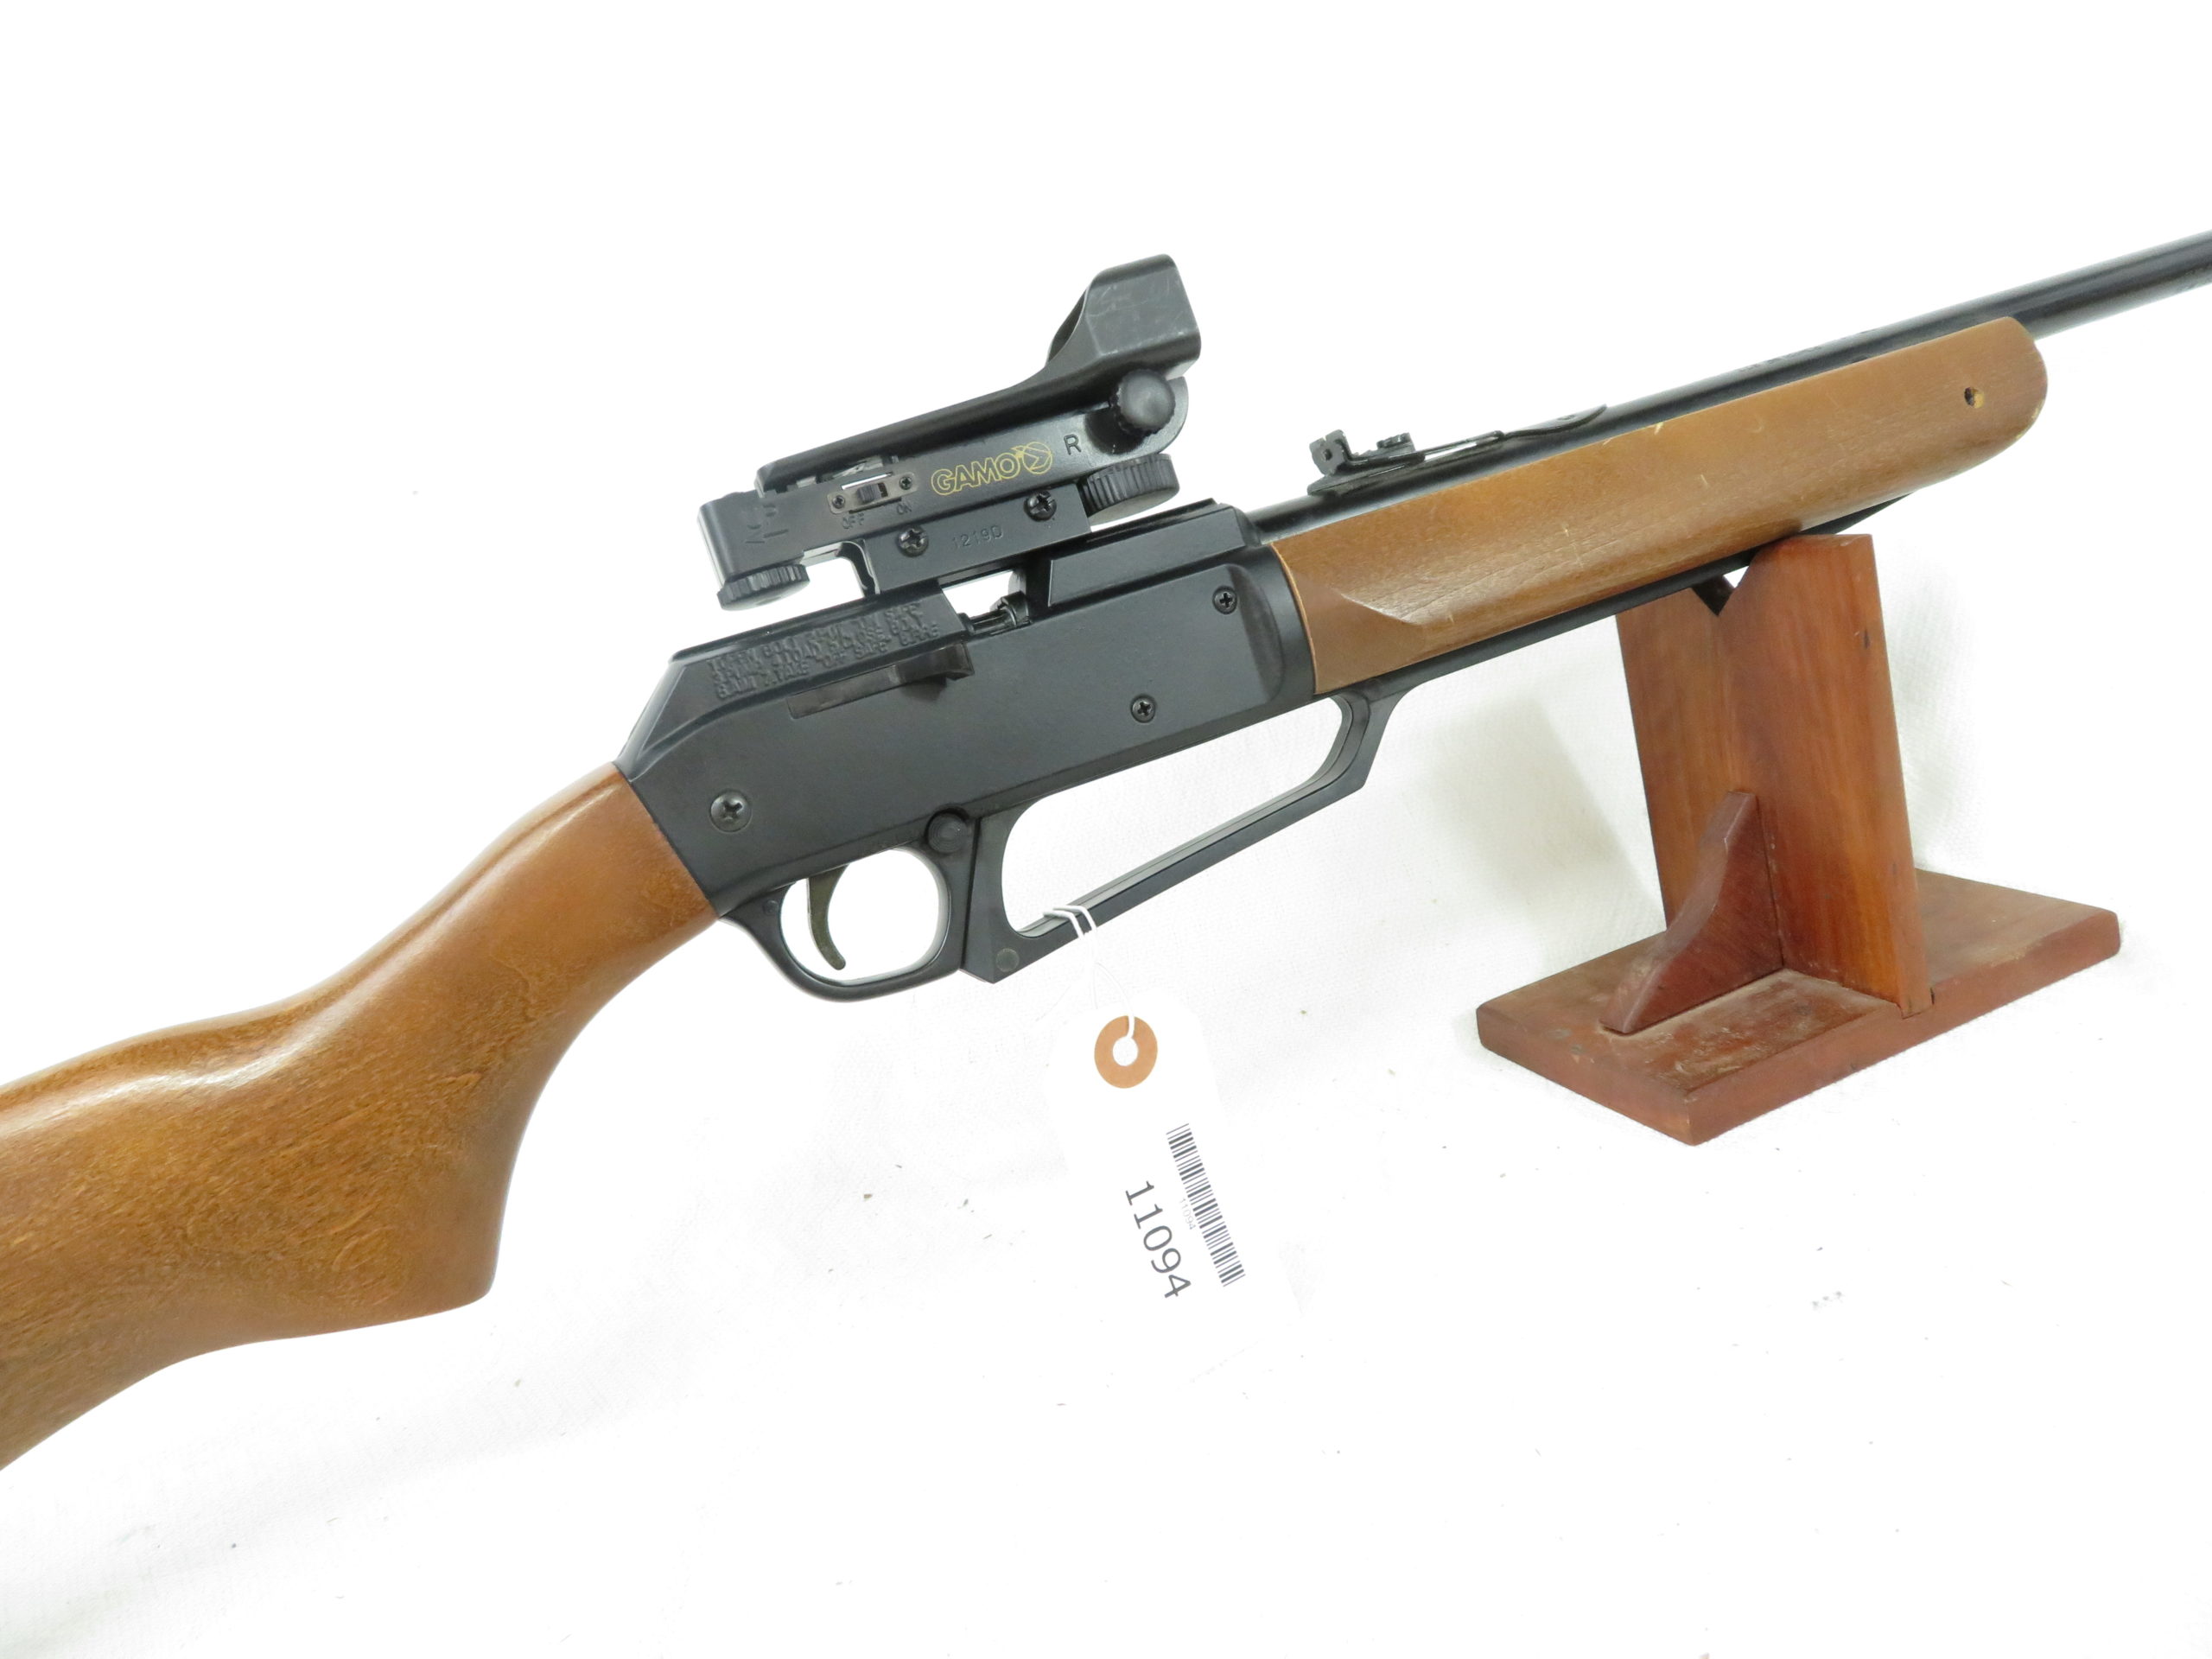 Daisy Powerline Pellet Rifle Sku Baker Airguns